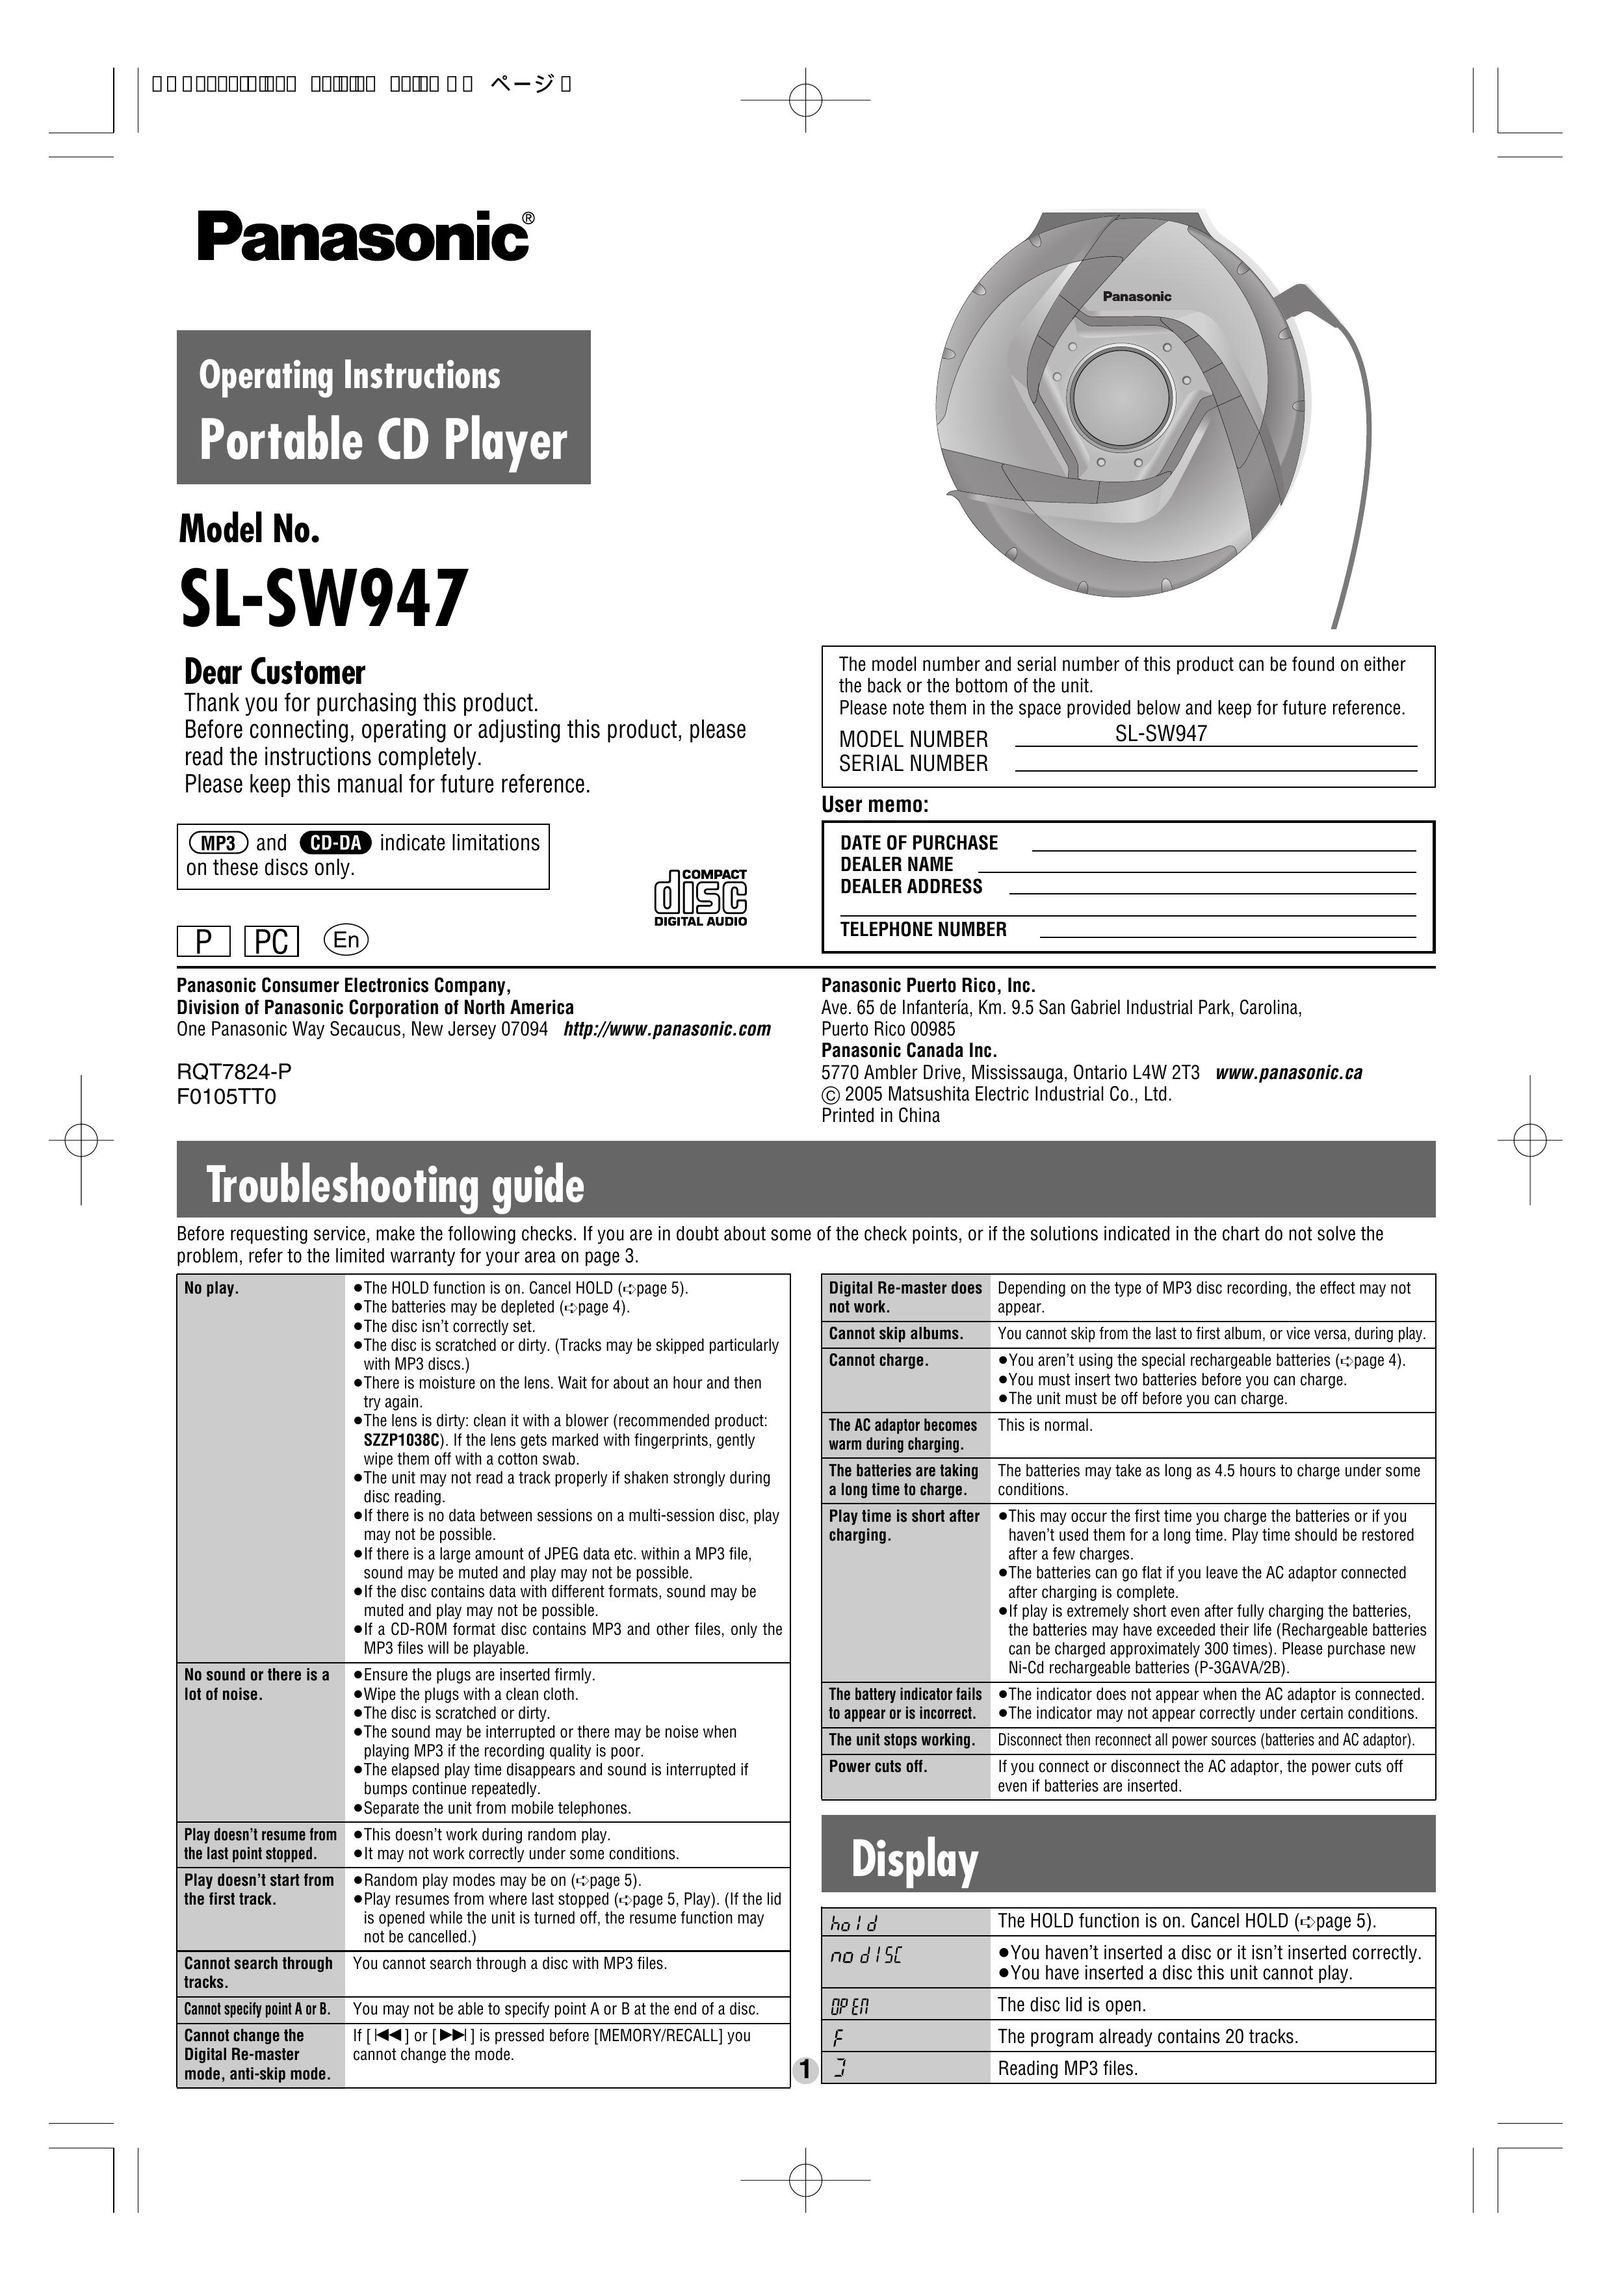 Panasonic SL-SW947 Portable CD Player User Manual